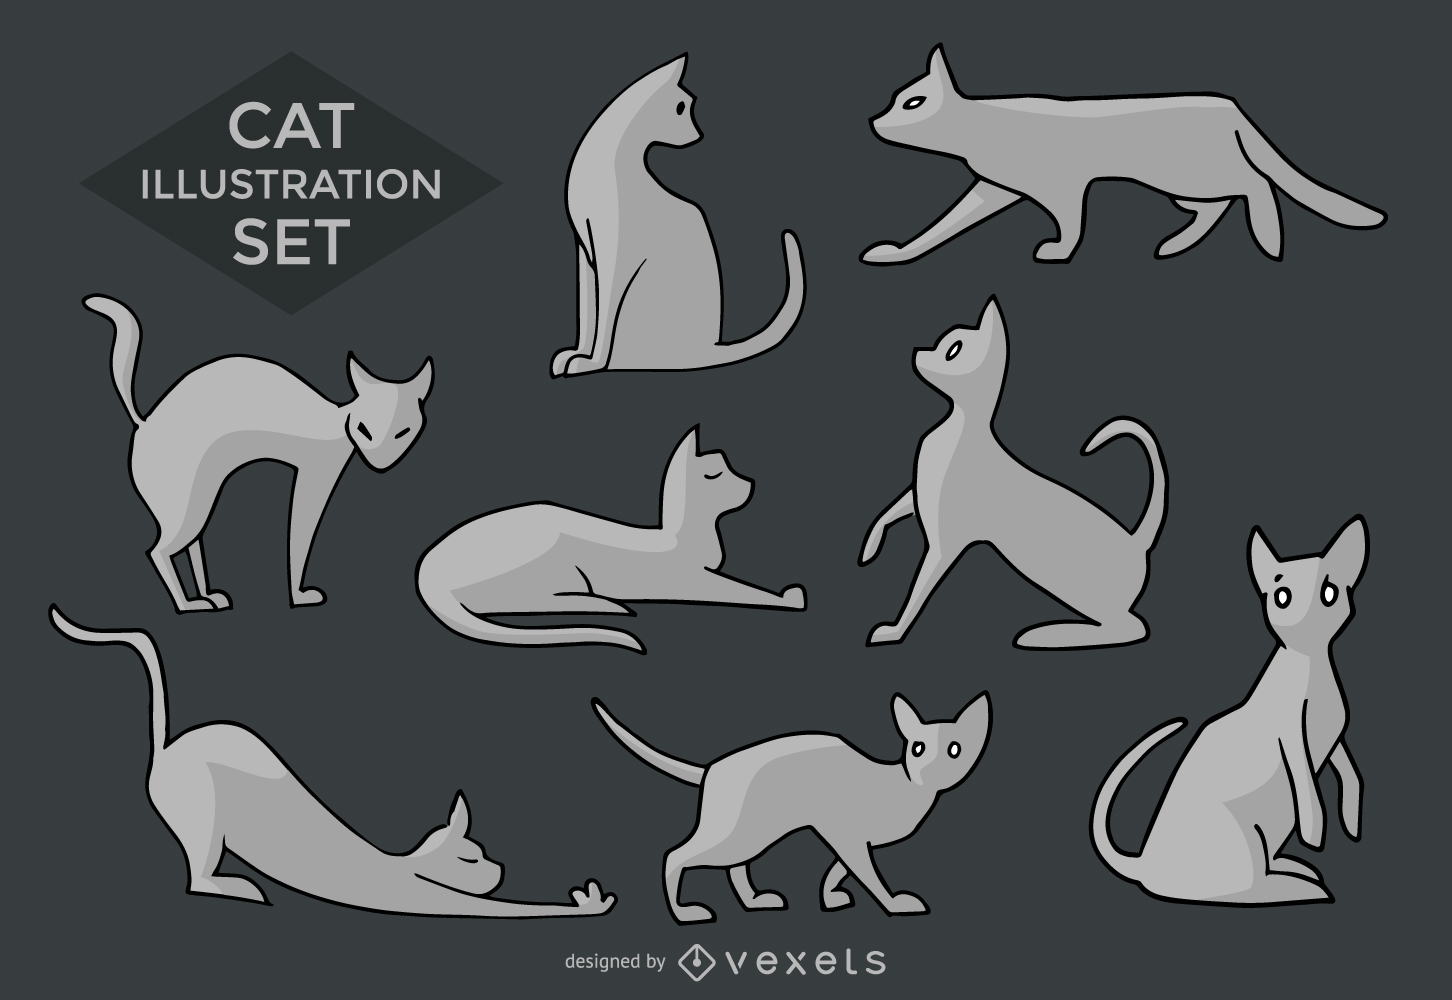 Siluetas e ilustraciones de gatos